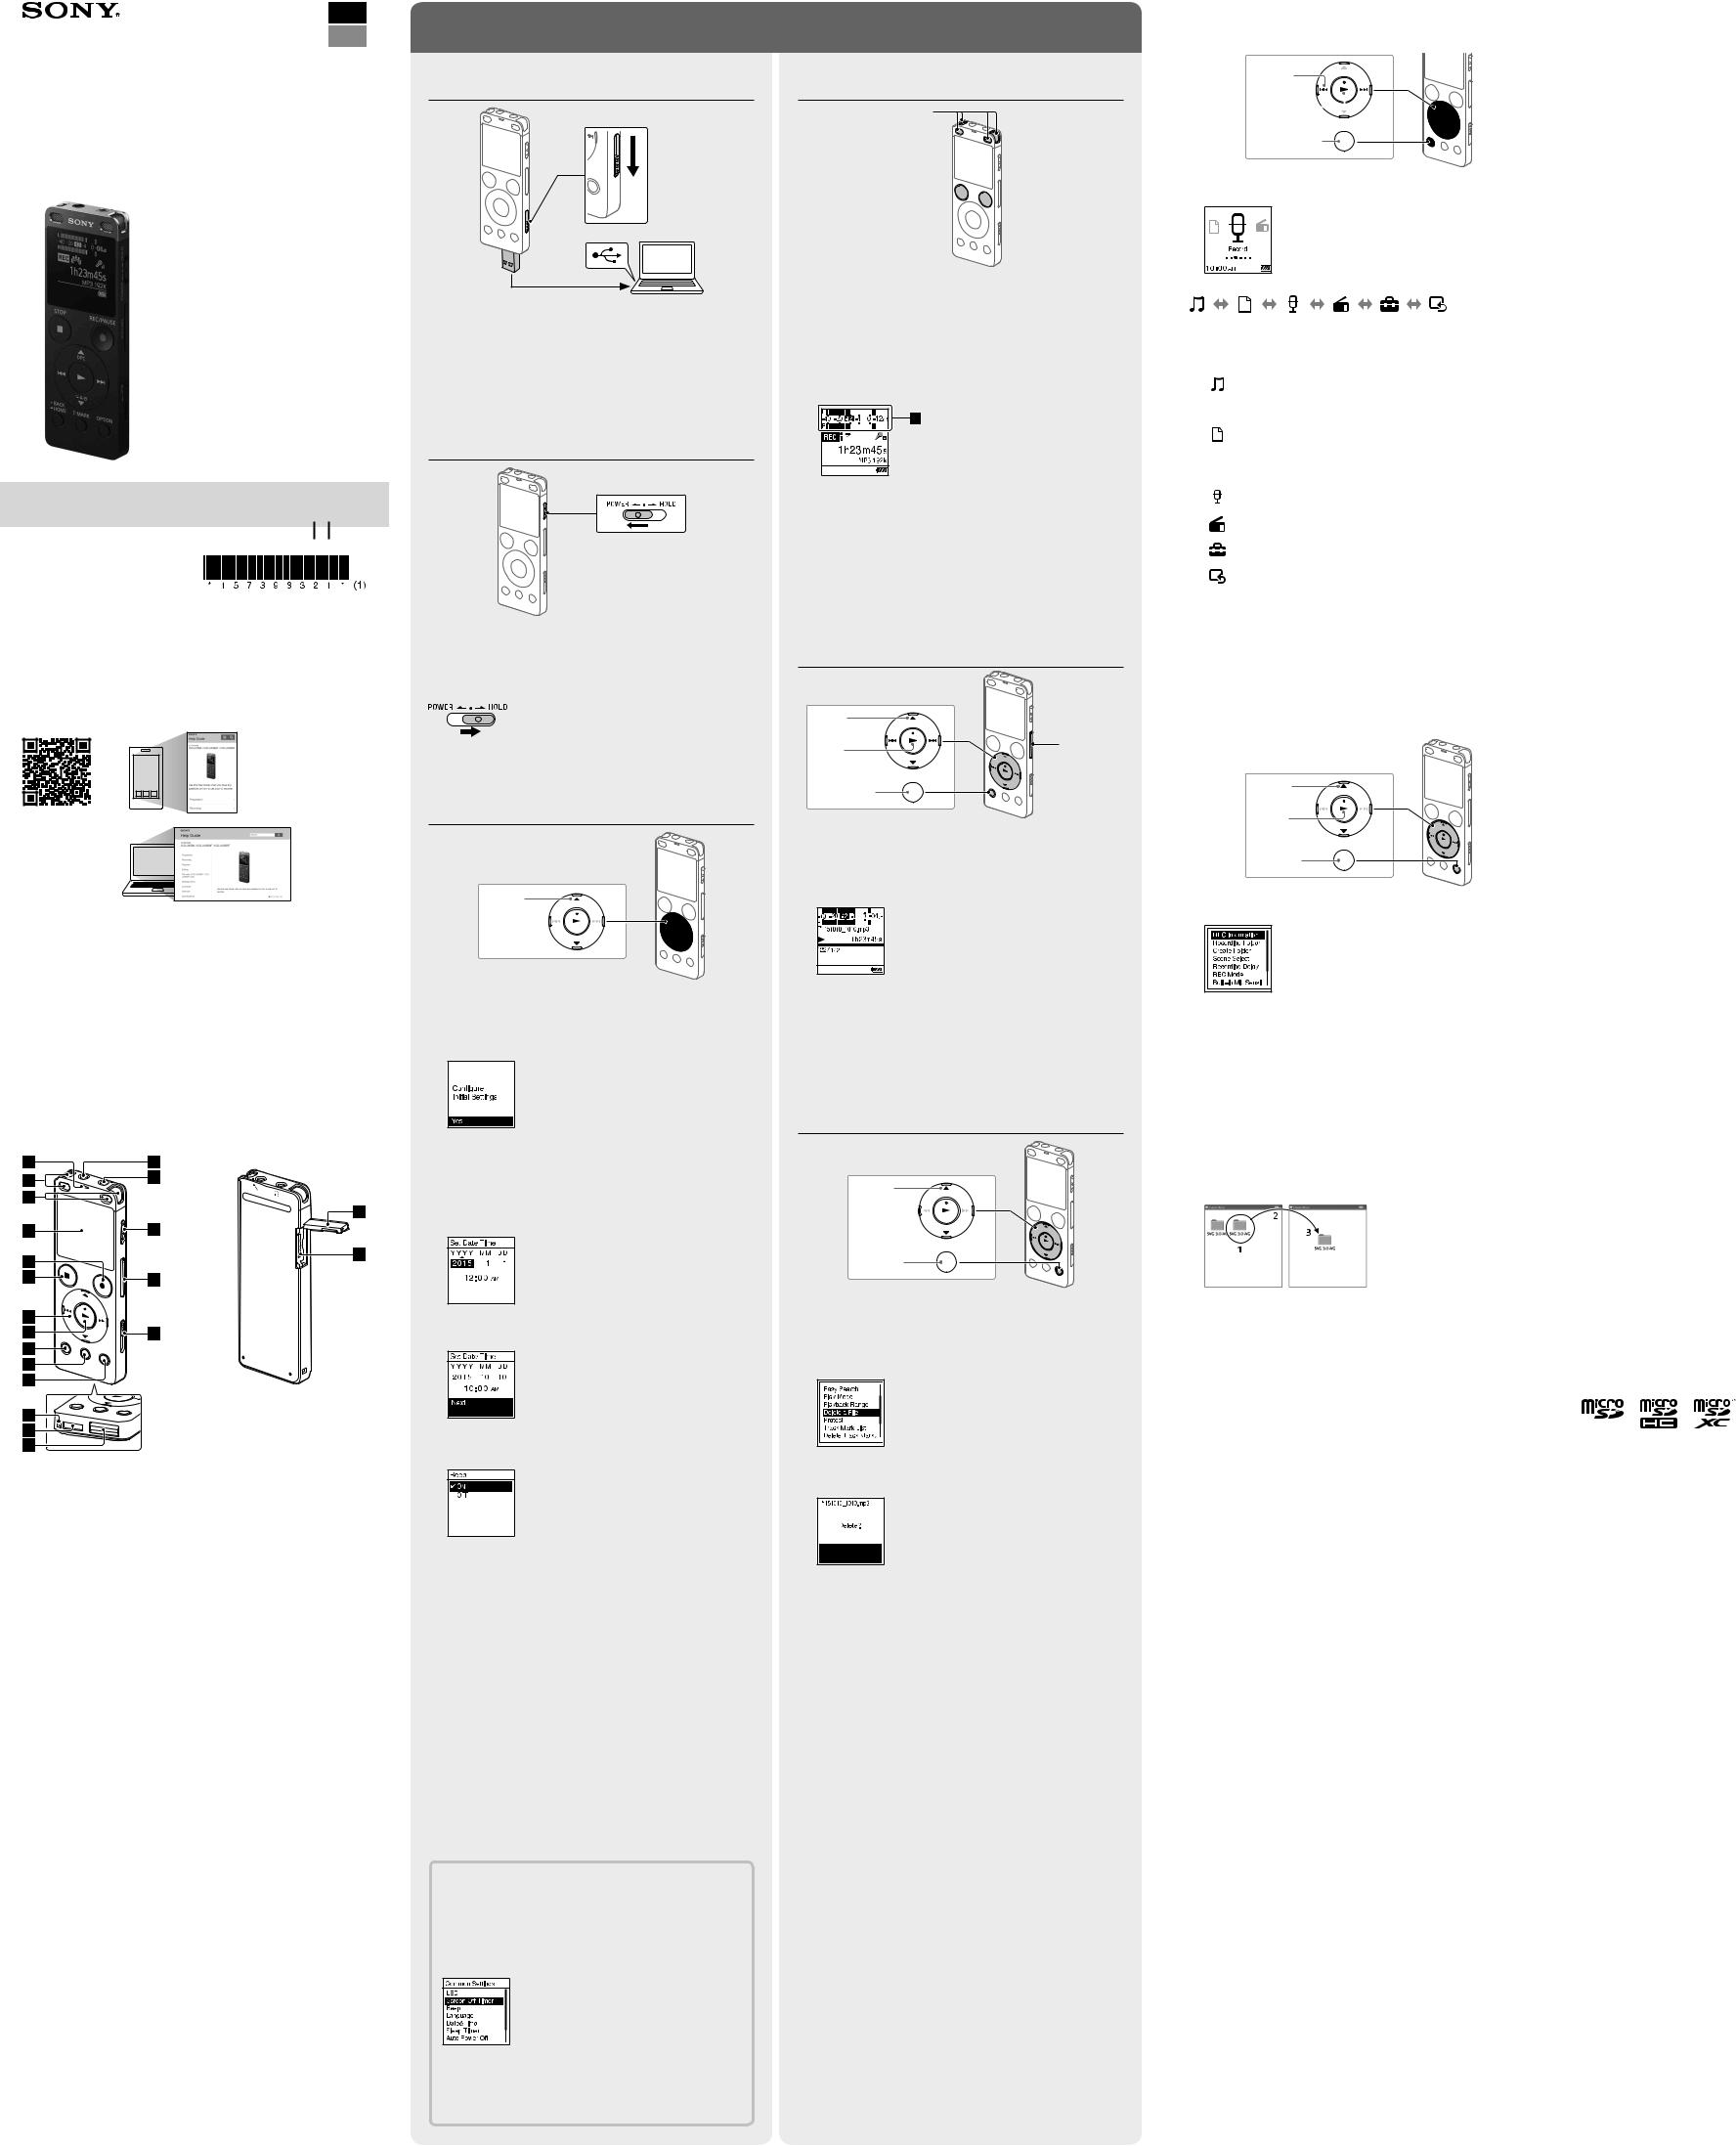 Sony ICD-UX560F User Manual